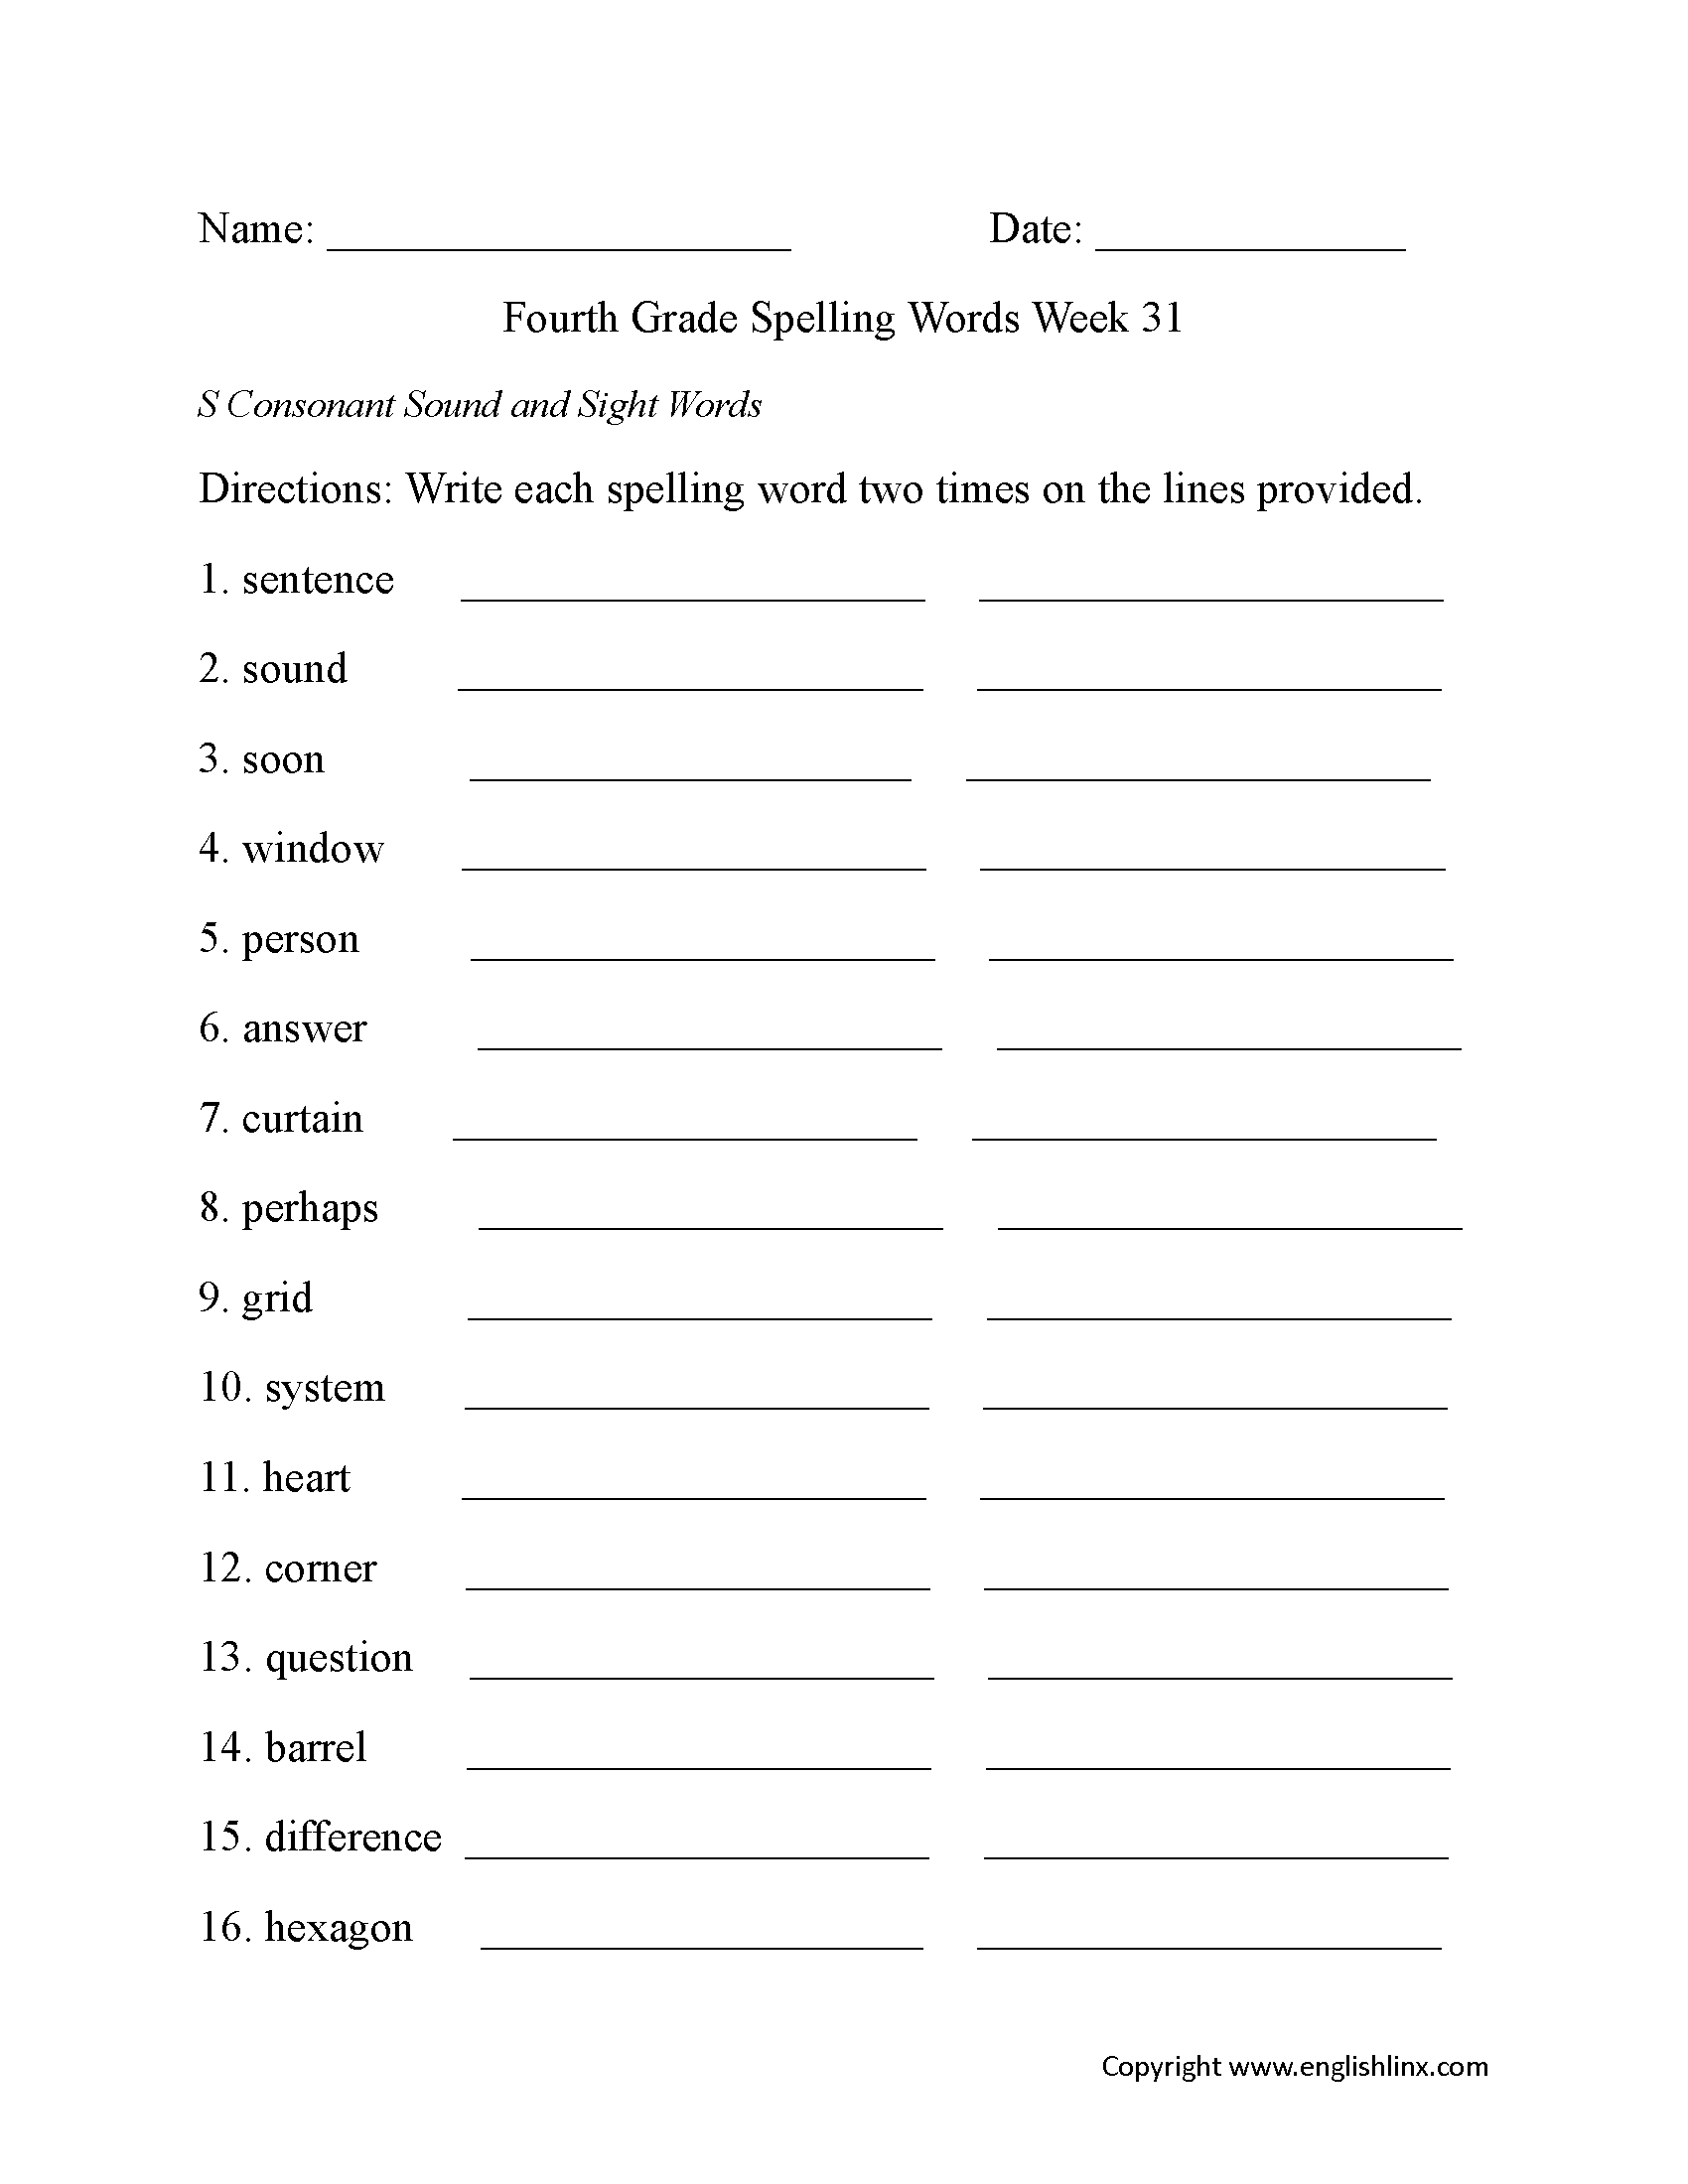 Week 31 S Consonant Fourth Grade Spelling Worksheets